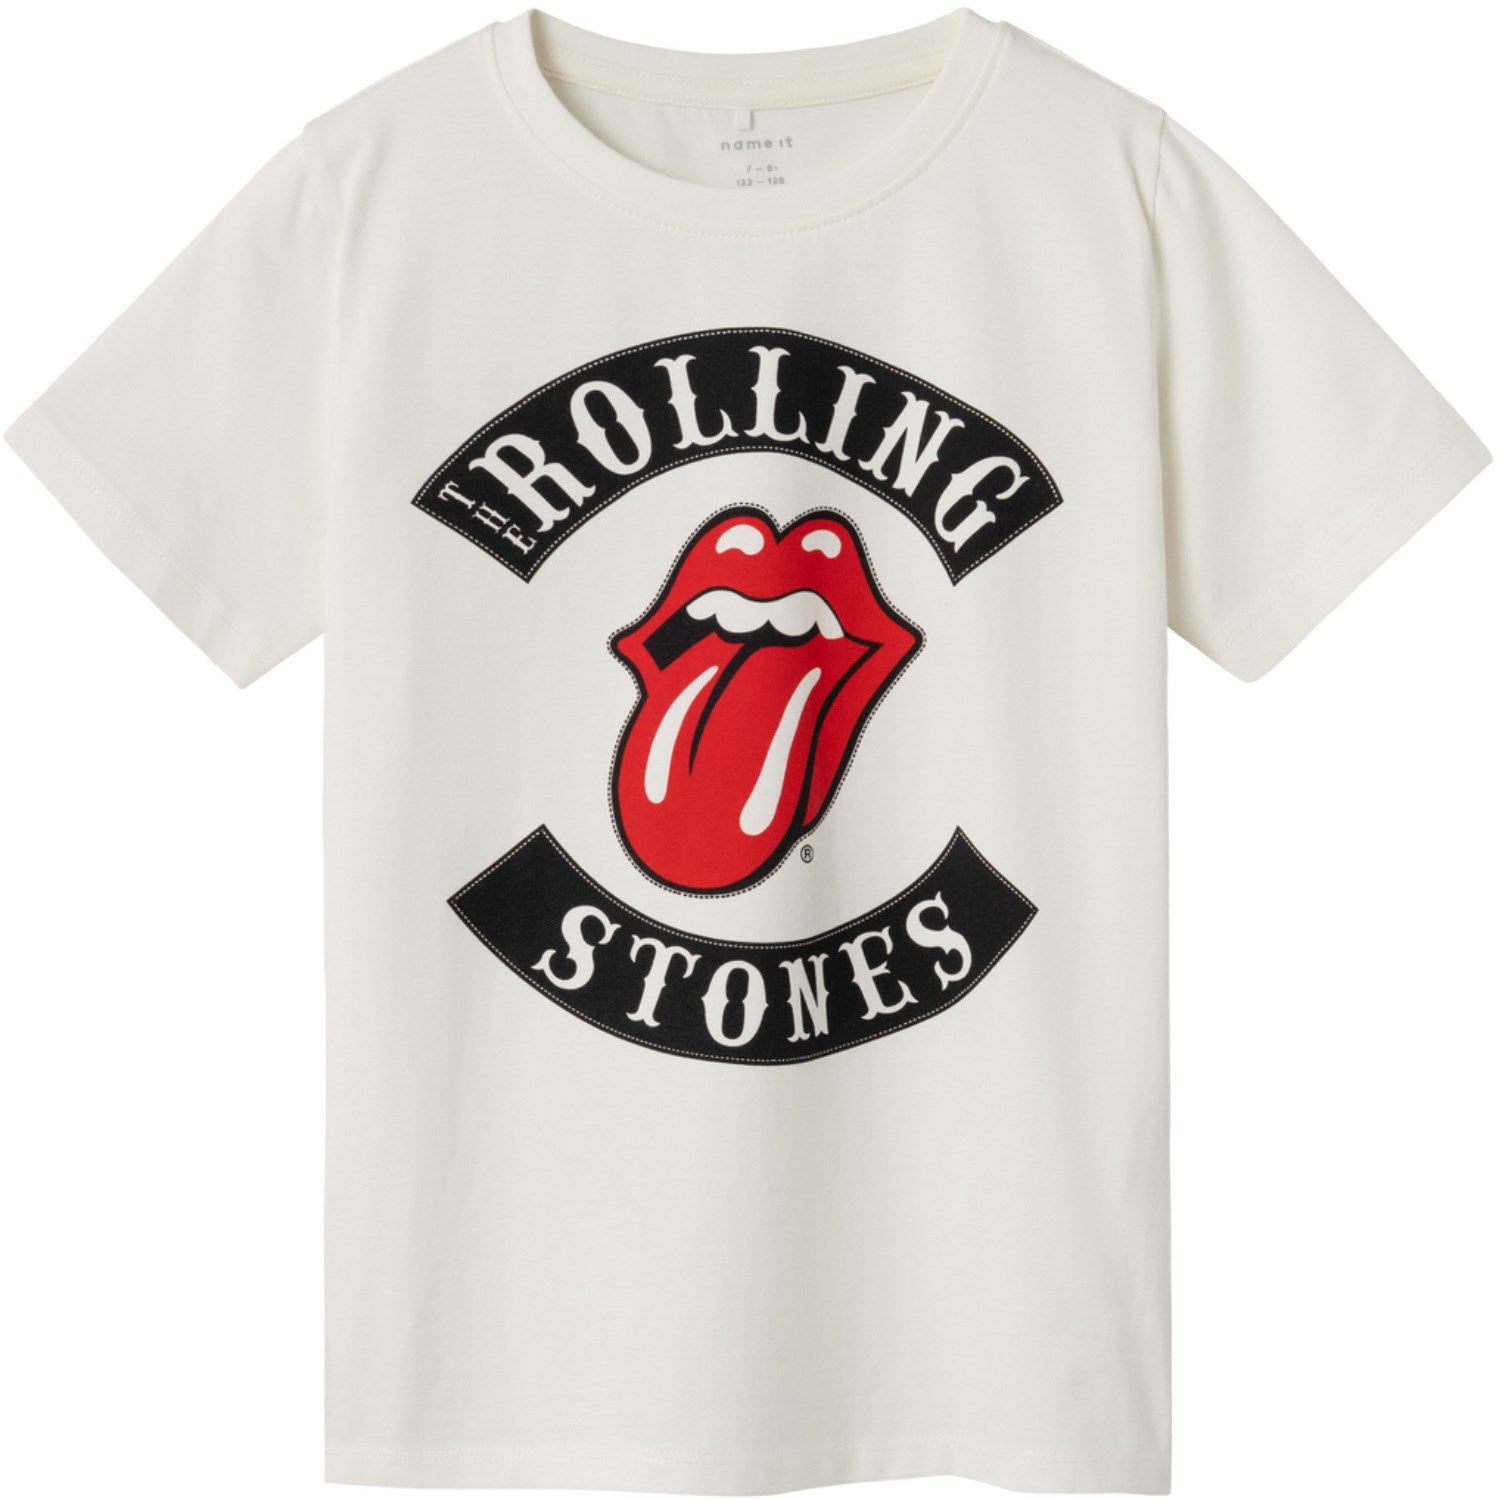 Name It Jet Stream Juki Rolling Stones T-Shirt